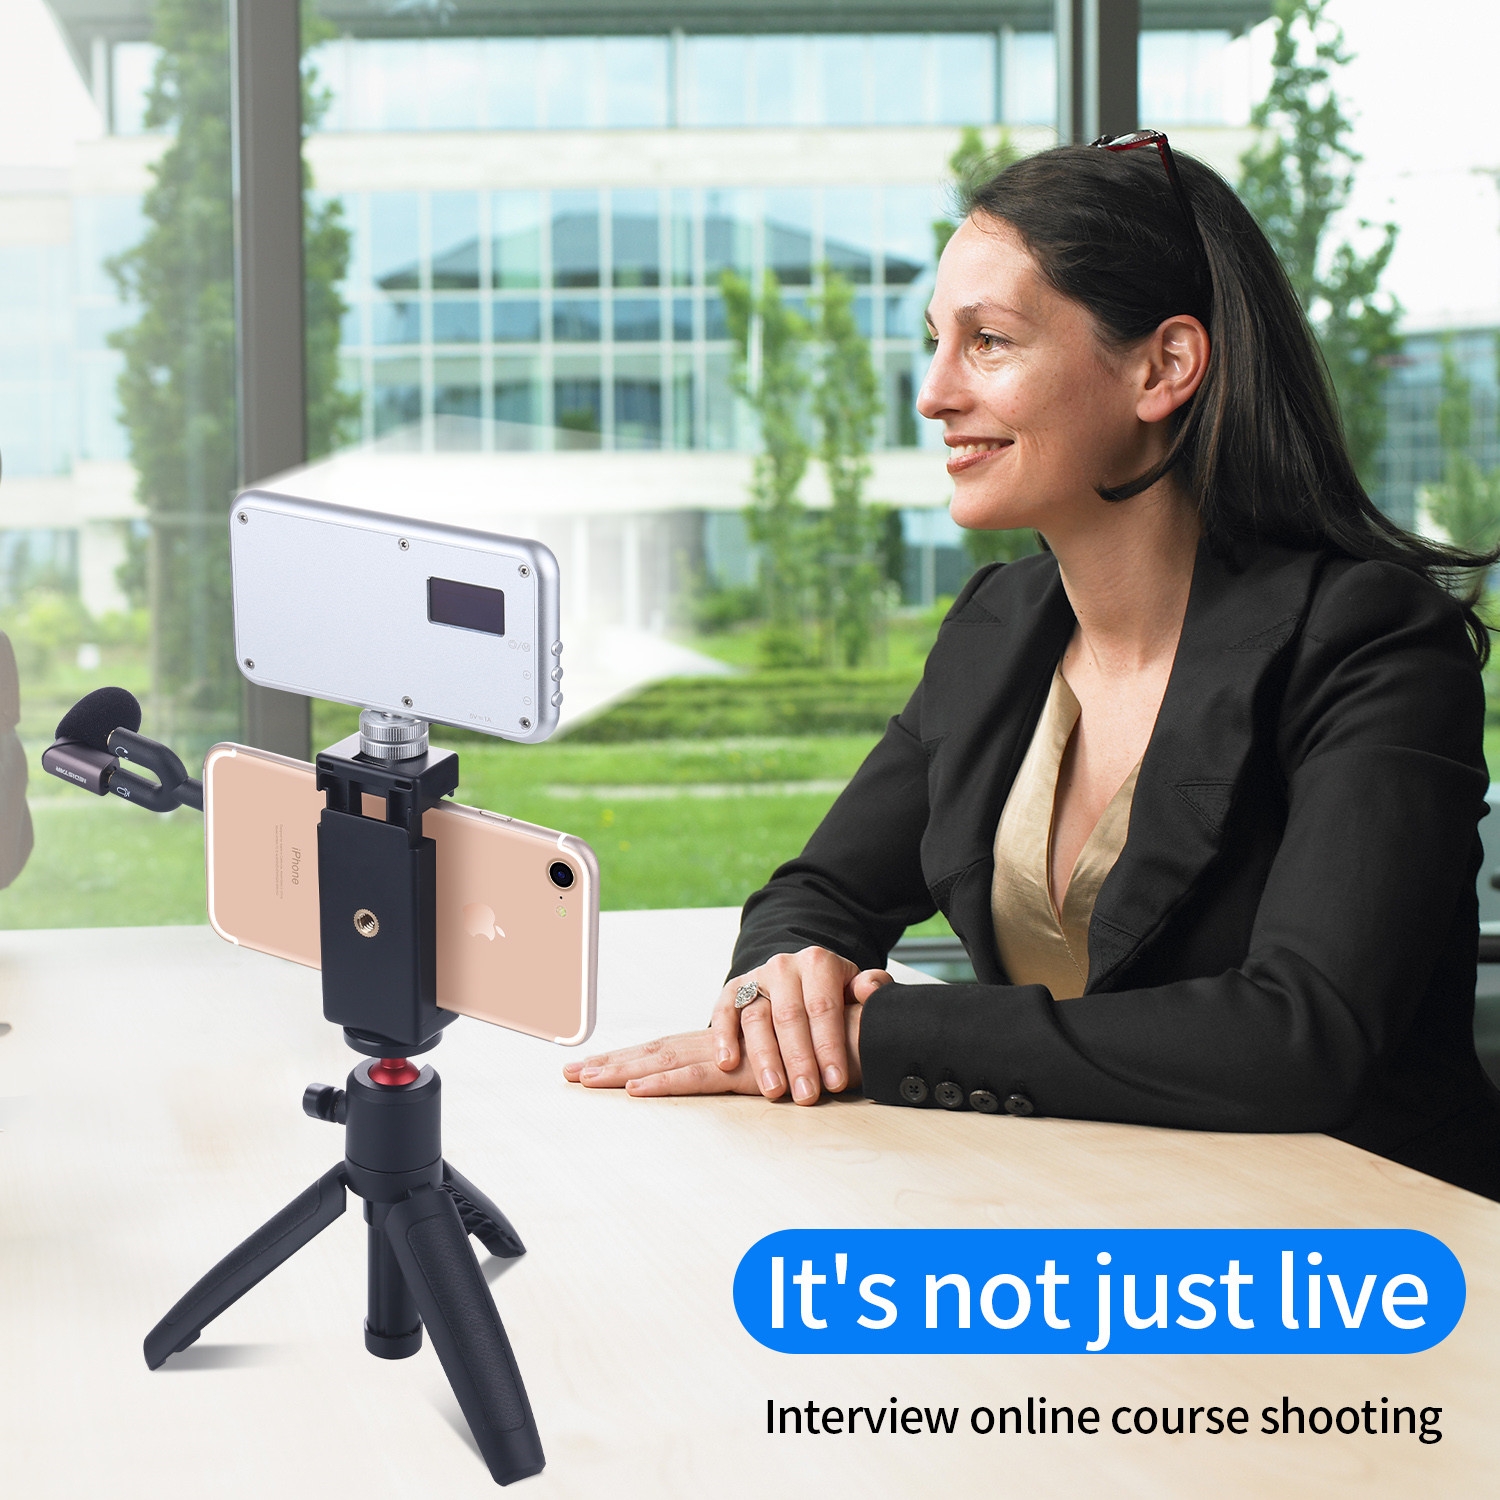 LEDISTAR DX-06 Portable Hanheld Selfie Telescopic Stick Tripod with LED Bluetooth Controller Smartphone Bracket for GoPro Cameras